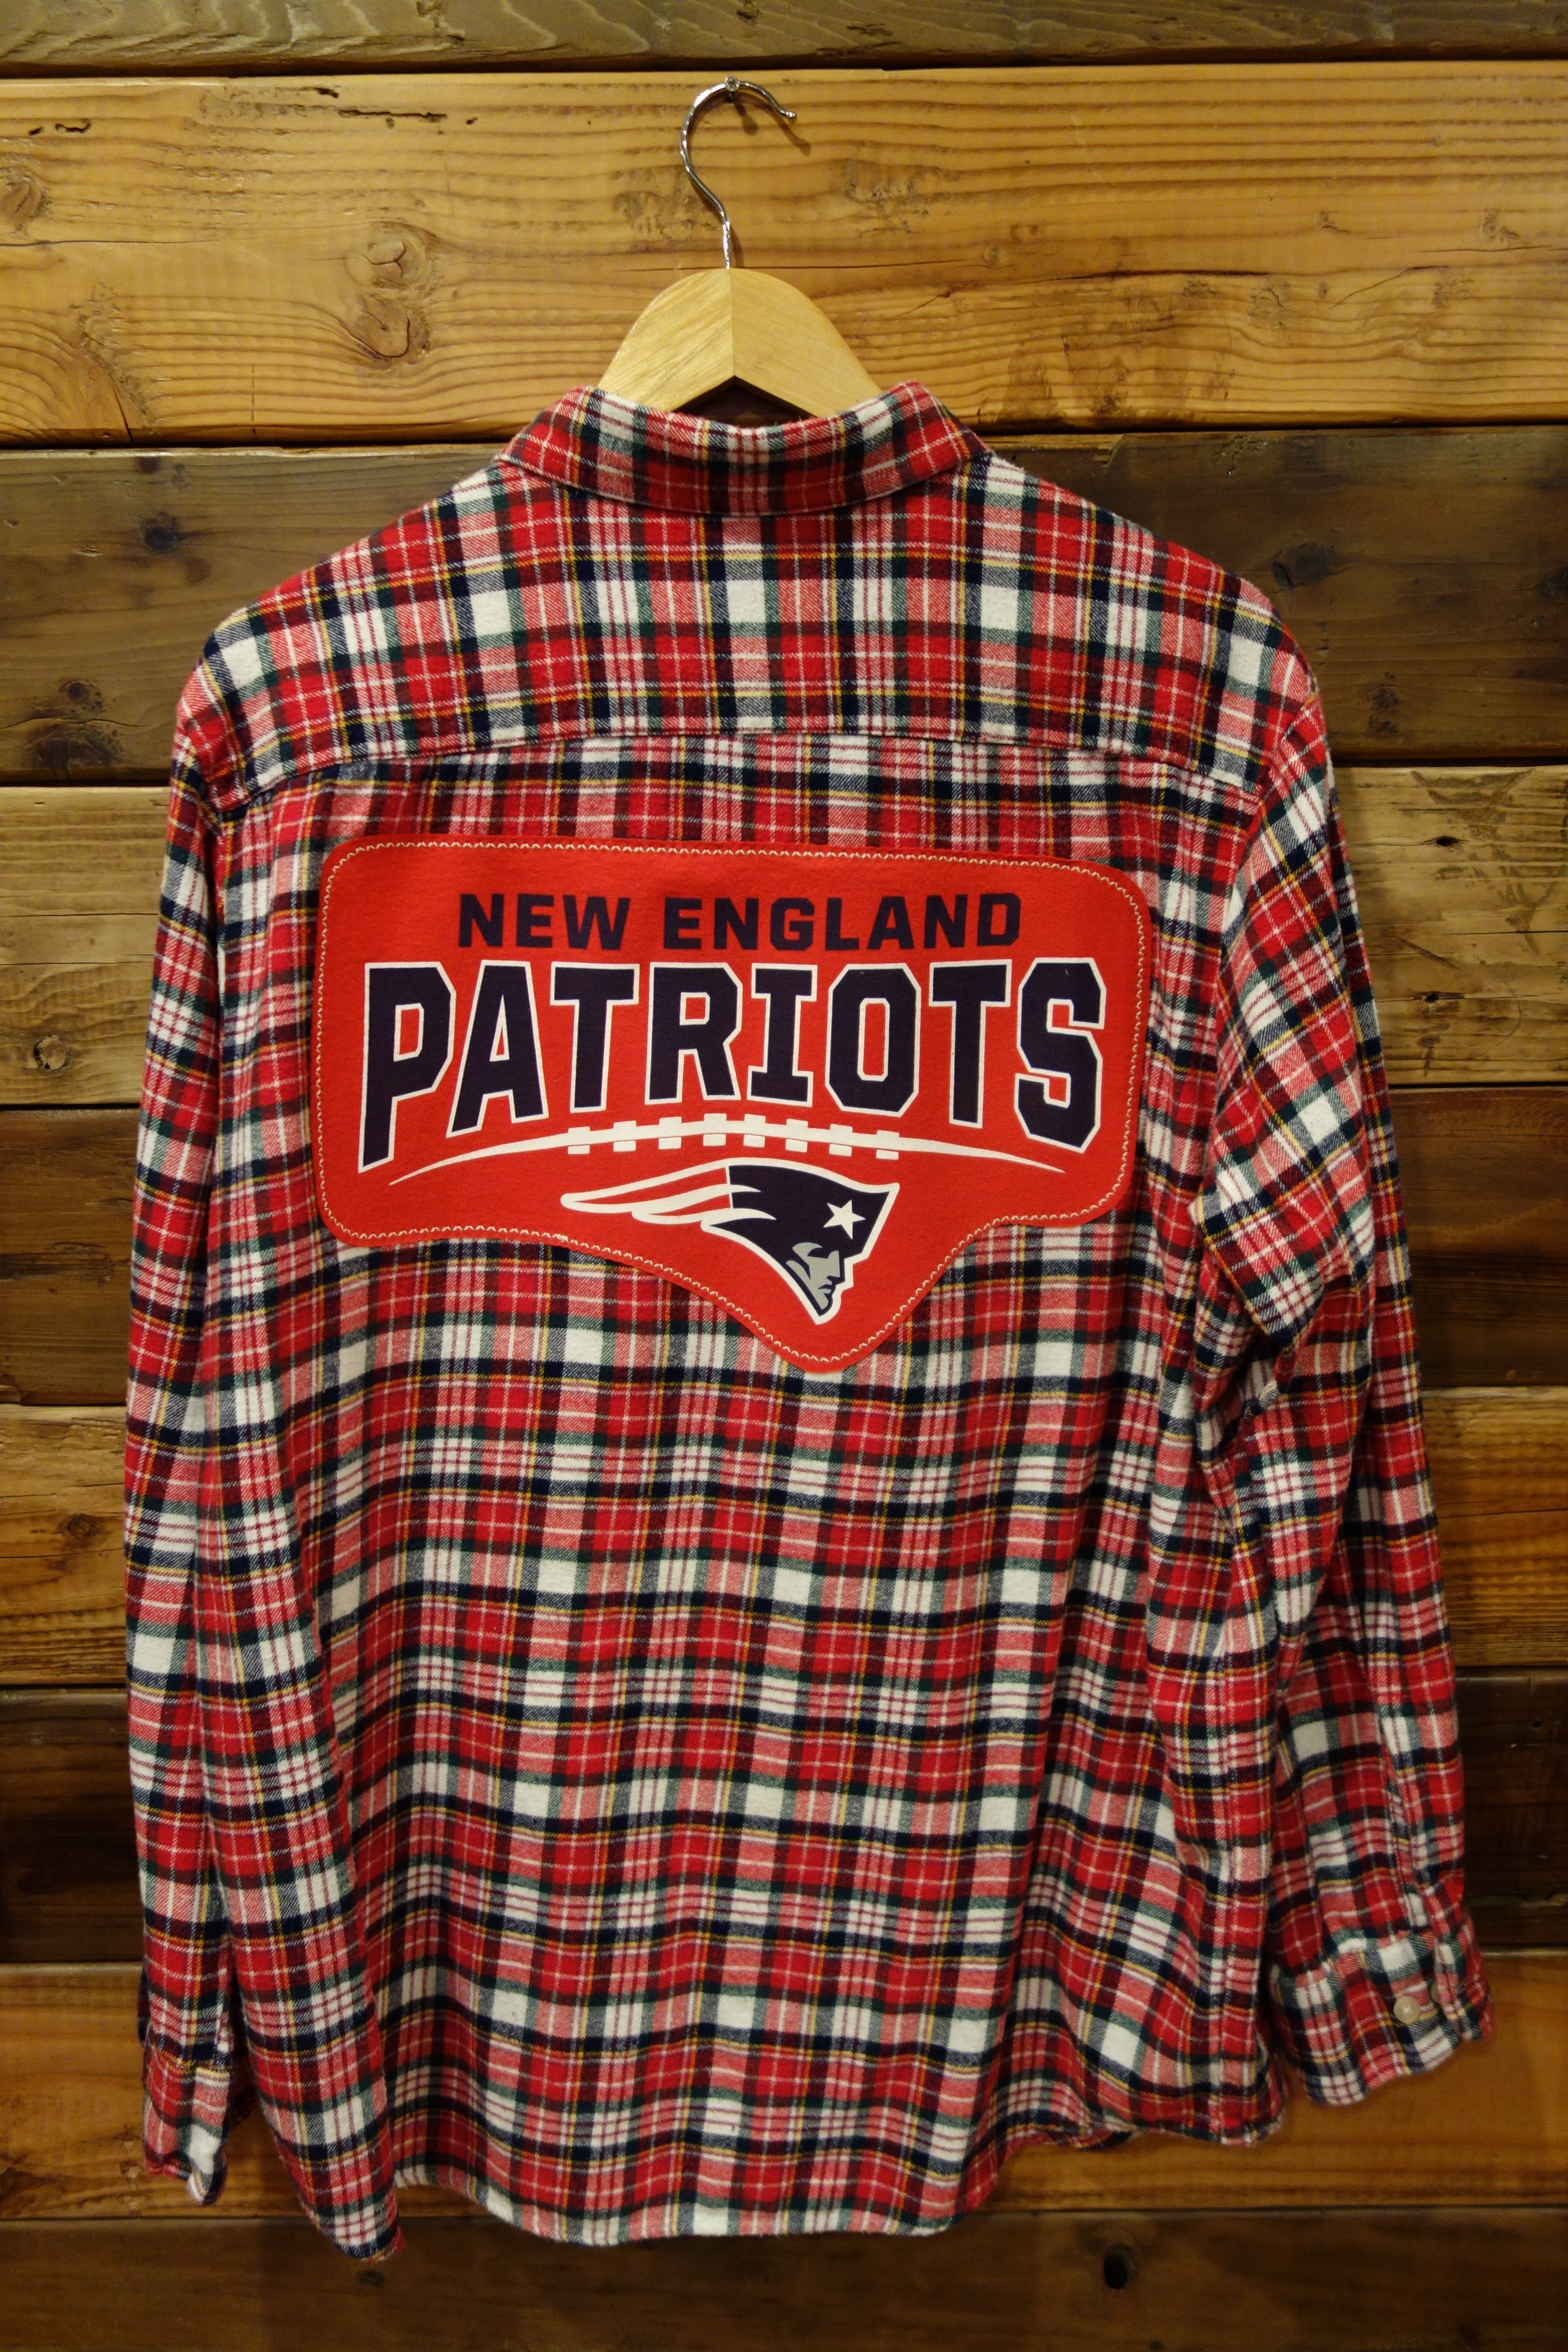 New England Patriots one of a kind vintage John Ashford flannel shirt